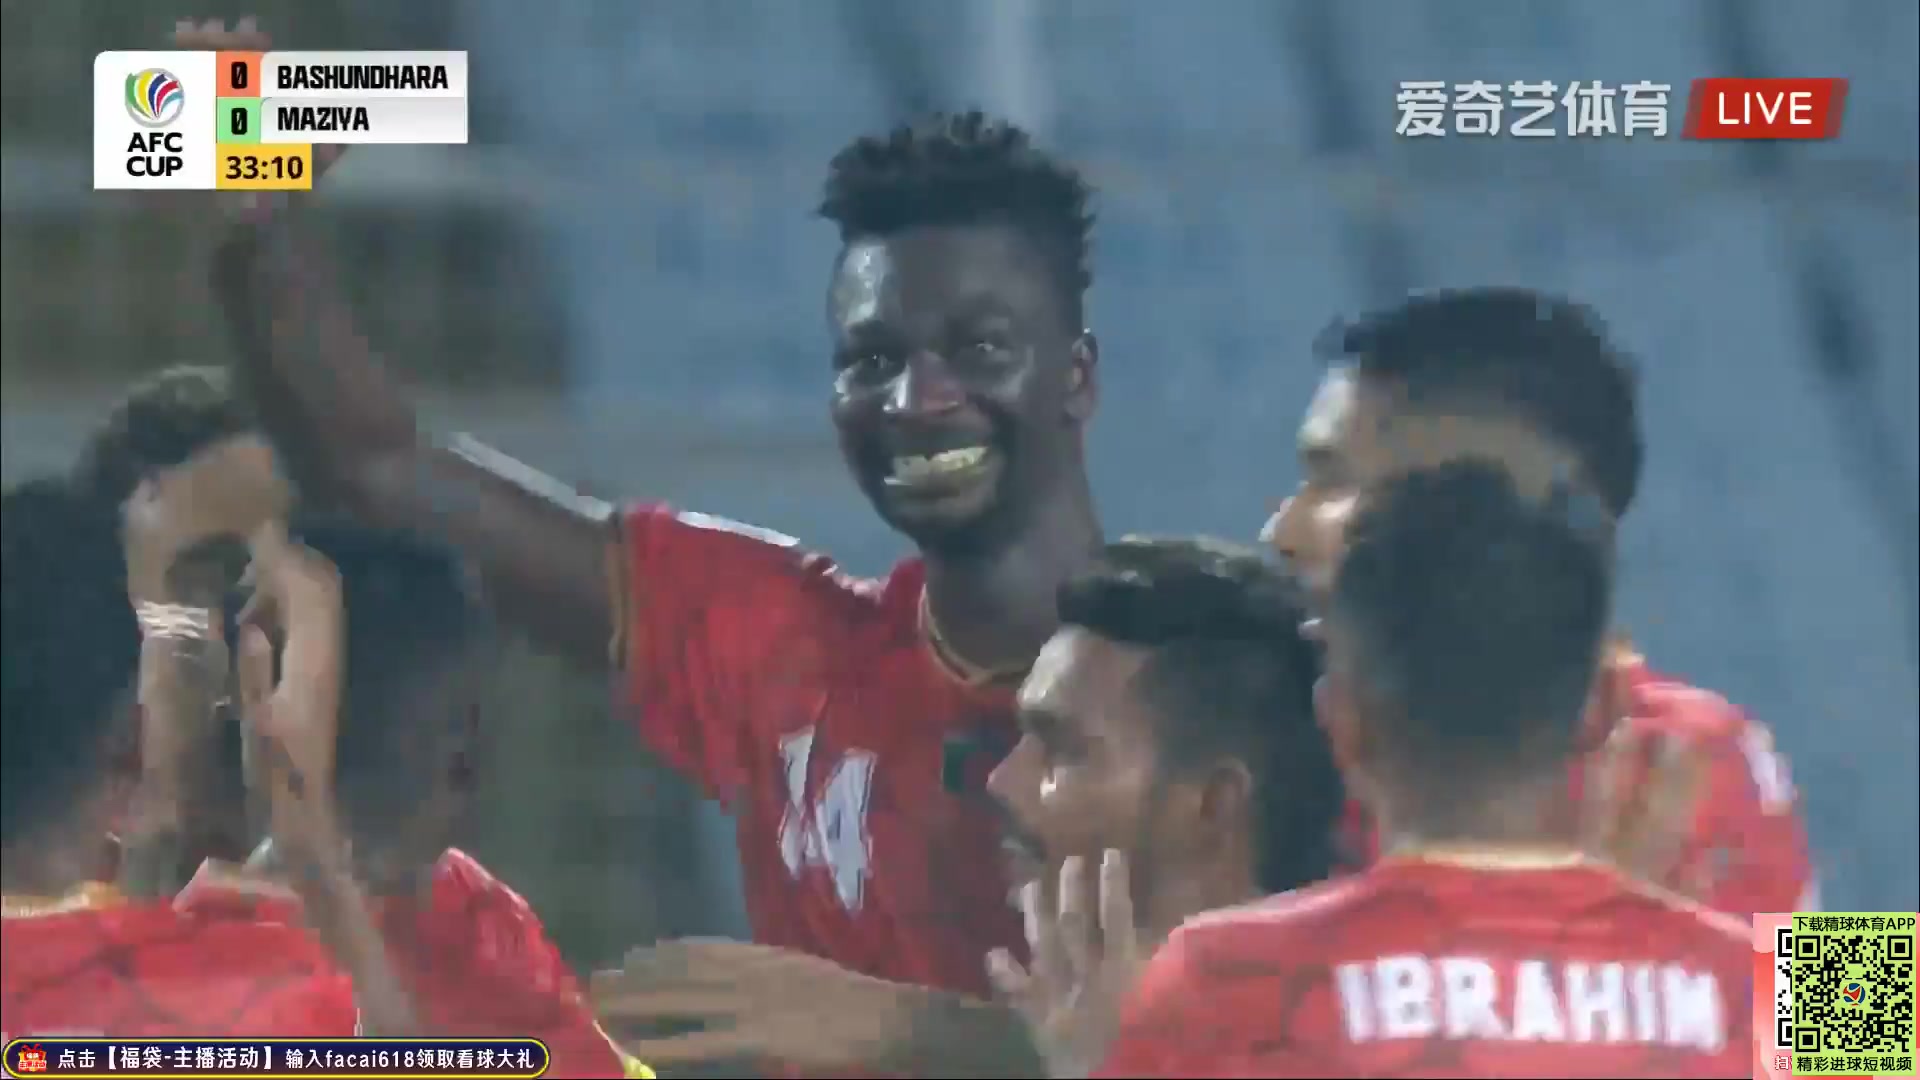 AFC Cup Bashundhara Kings Vs Maziya Nuha Marong Goal in 32 min, Score 1:0